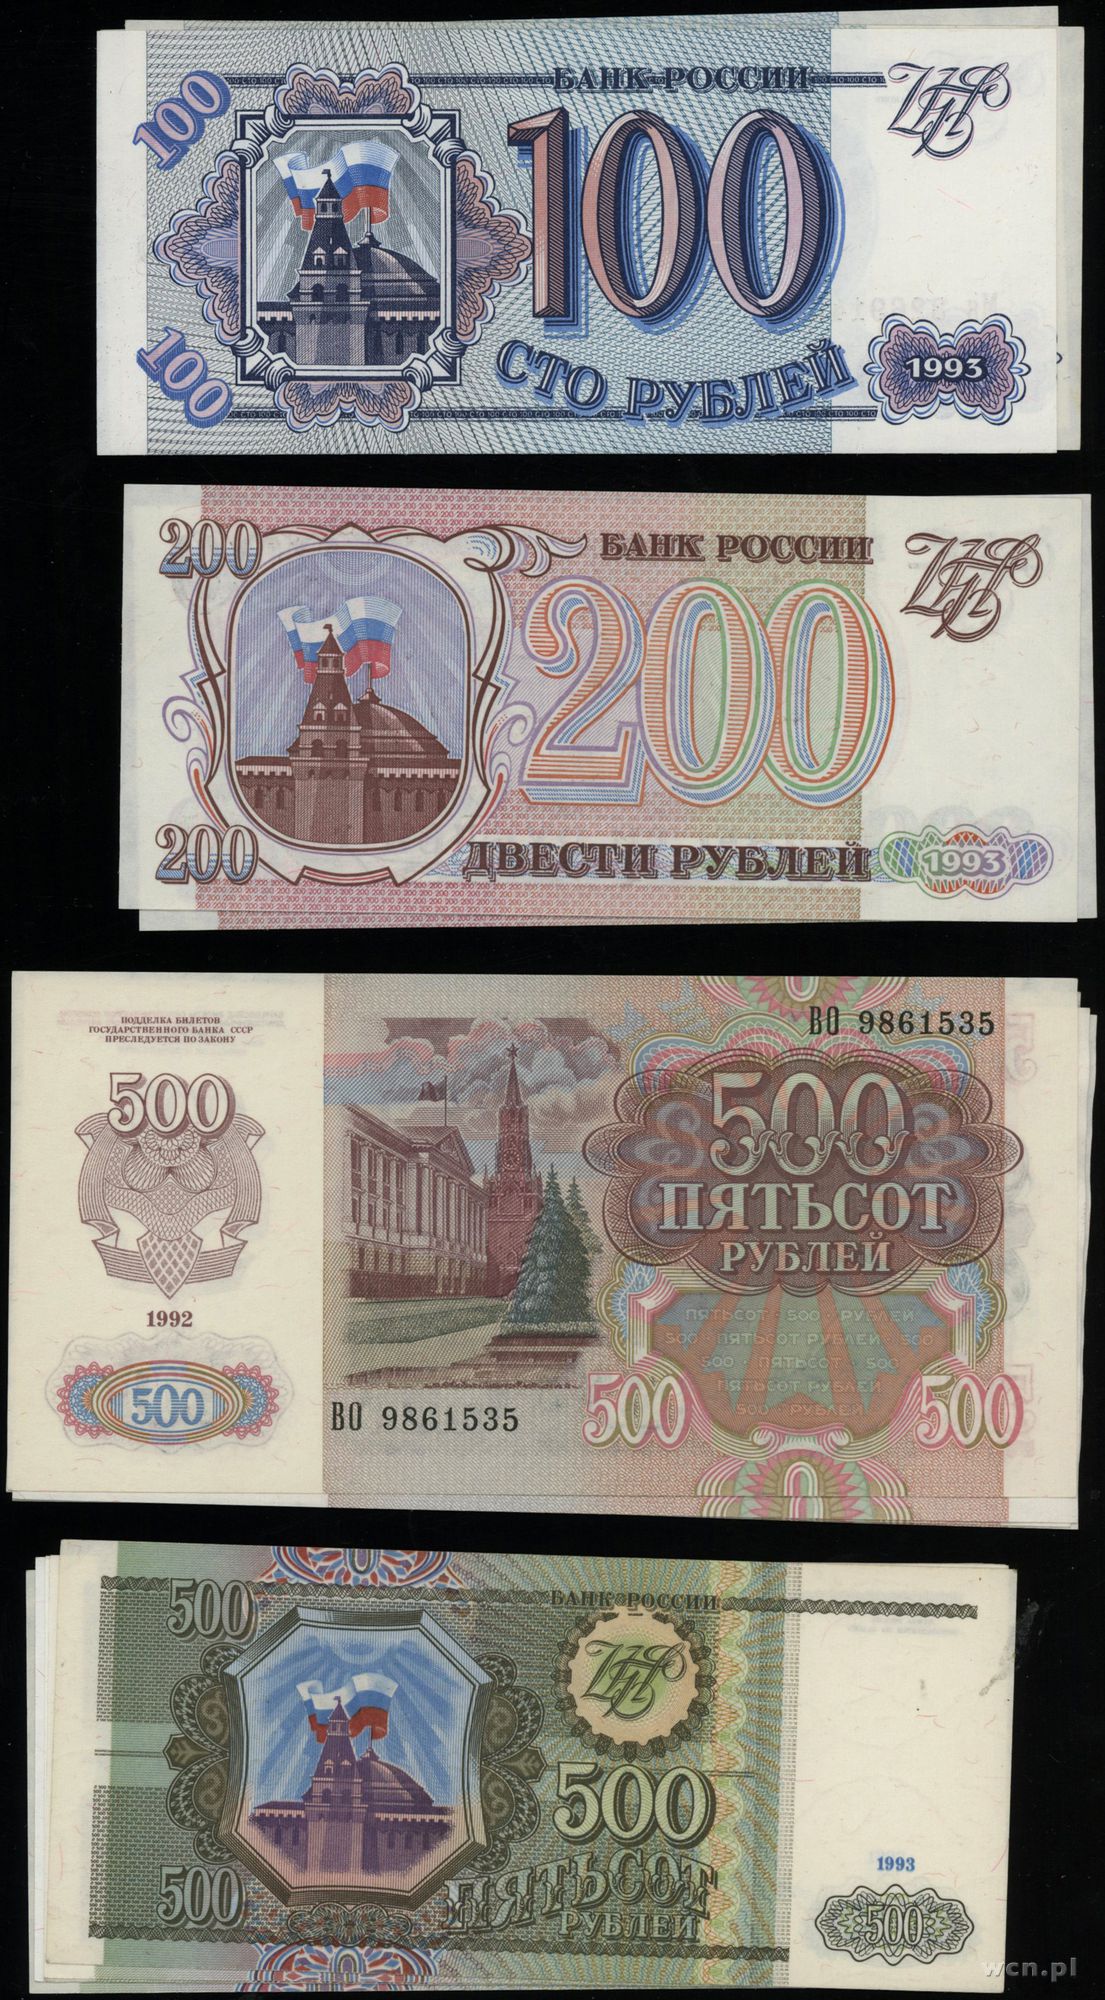 200 рублей 90. Двести рублей купюра 1993. 200 Рублей 1993. Банкнота 200 рублей 1993. Двести рублей 1993 года.